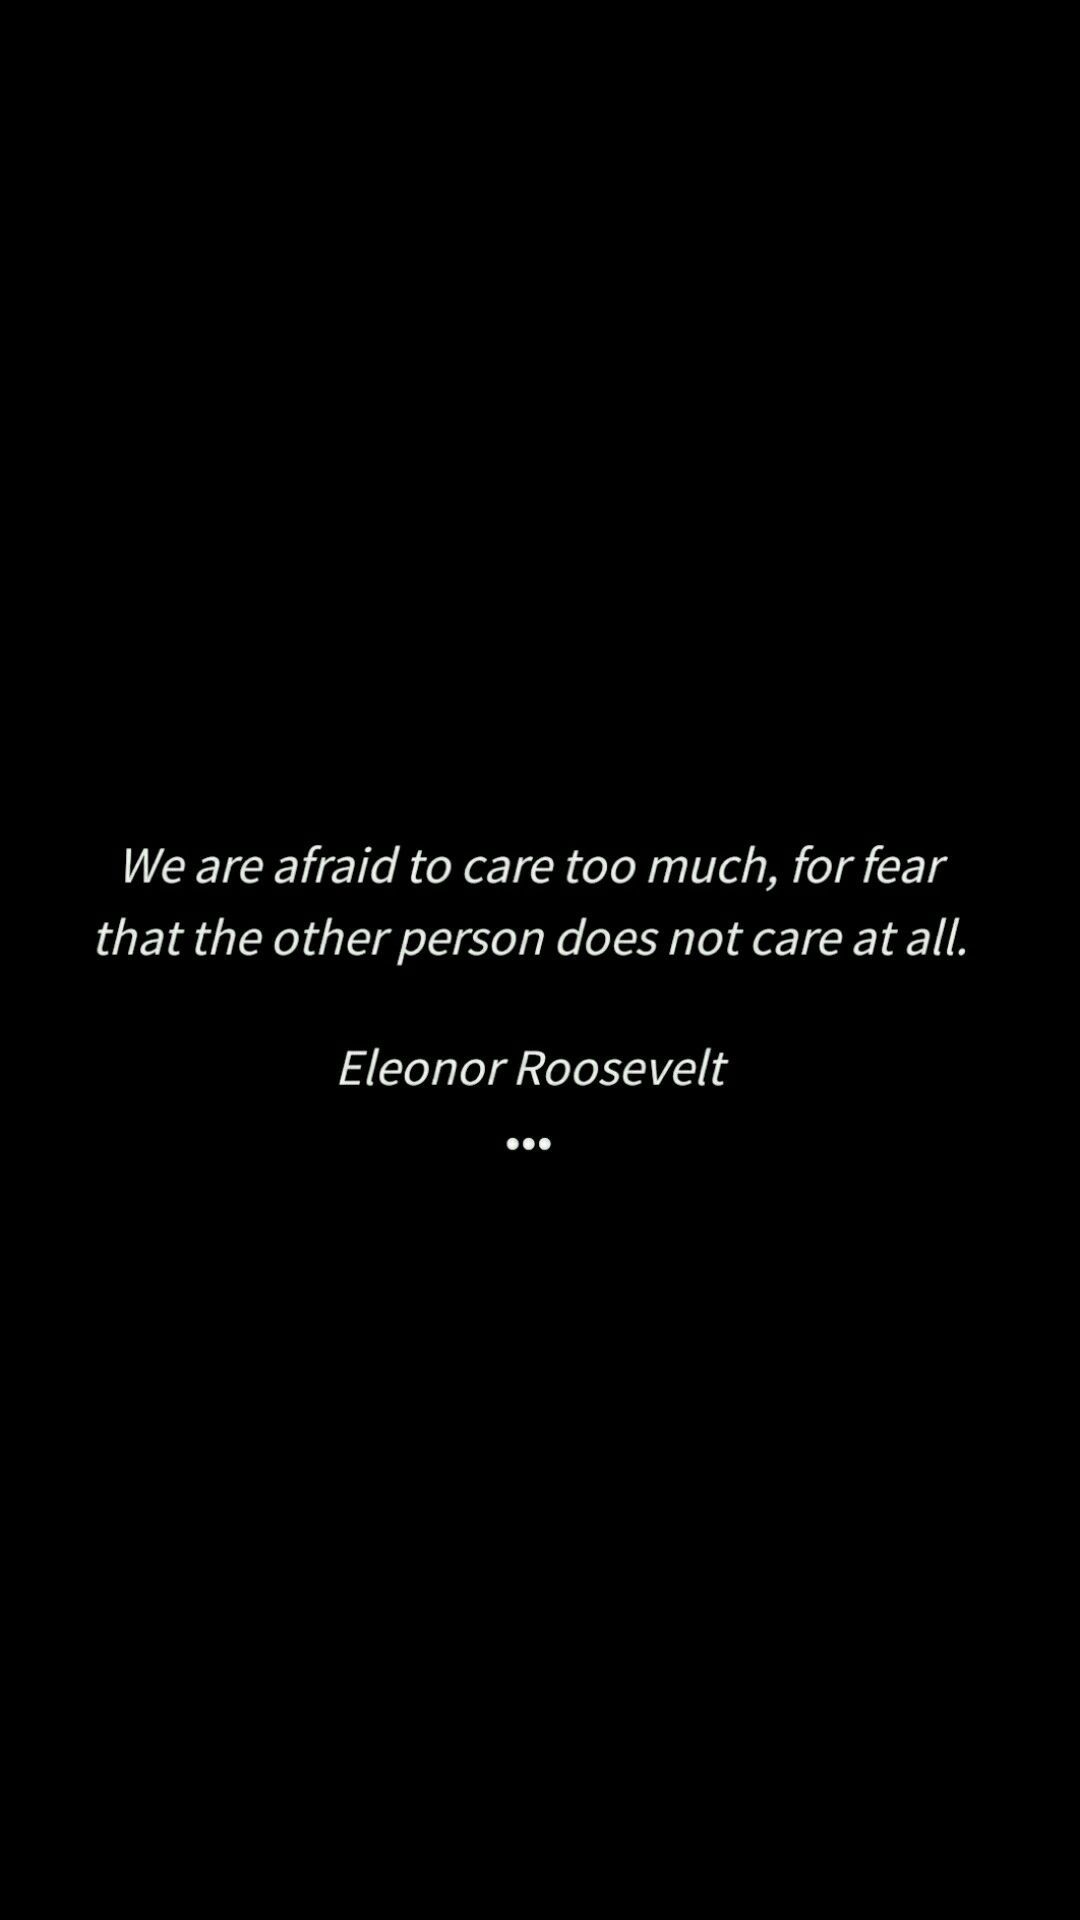 Eleanor Roosevelt Quotes: Screensaver (Follow Kshipra Bhandari for more). Elanor roosevelt quotes, Eleanor roosevelt quotes, Rap lyrics quotes